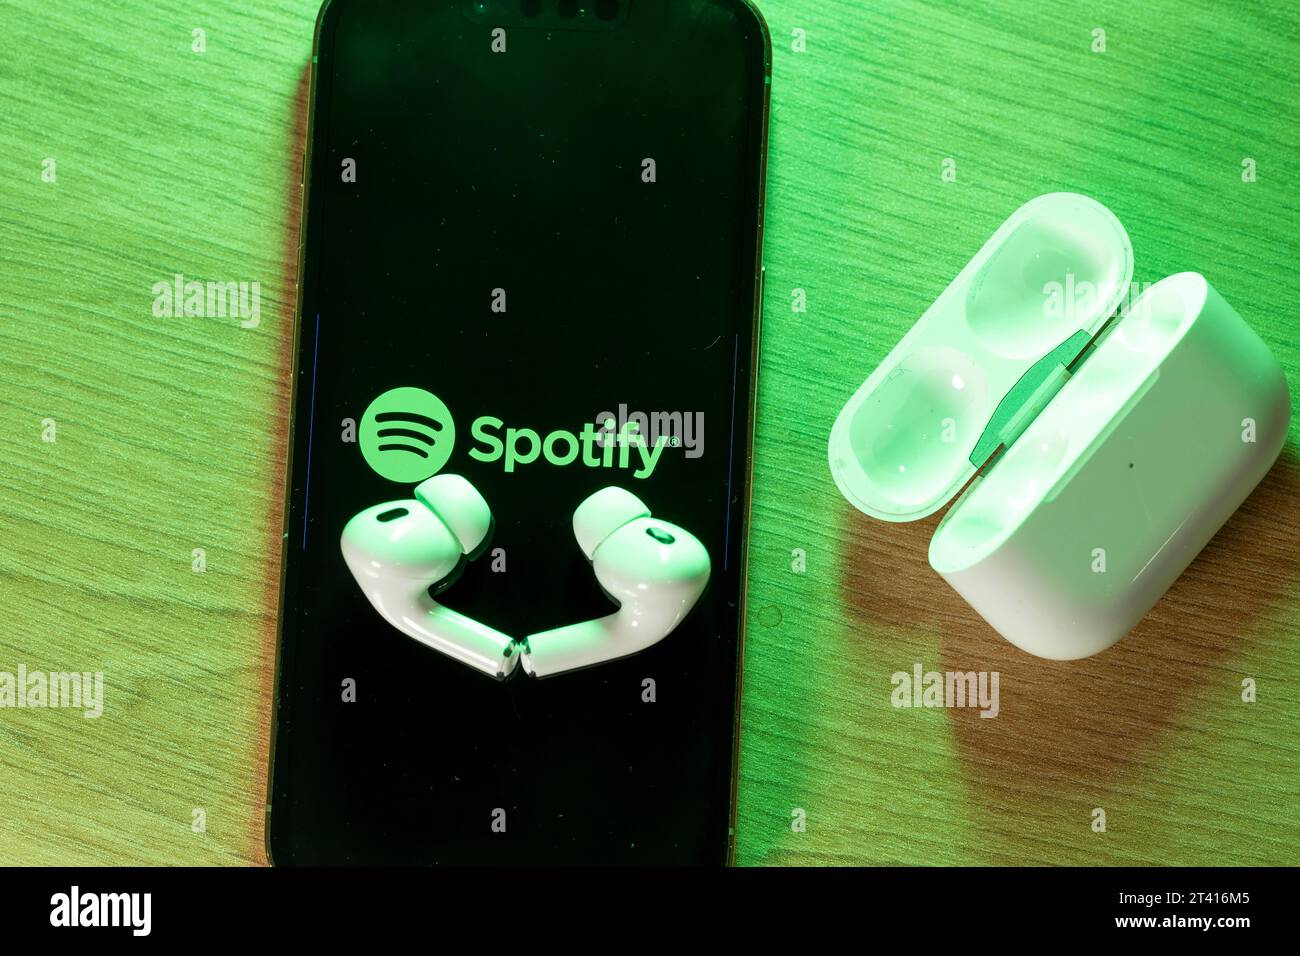 26.10.2023, Musikstreaming mit Spotify auf dem iPhone von Apple. Bei Spotify kann man sich Online Lieder anhören, auch unterwegs mit Ohrhörer. 26.10.2023, Spotify 26.10.2023, Spotify *** 26 10 2023, streaming music with Spotify on Apples iPhone With Spotify, you can listen to songs online, even on the go with earbuds 26 10 2023, Spotify 26 10 2023, Spotify Credit: Imago/Alamy Live News Stock Photo